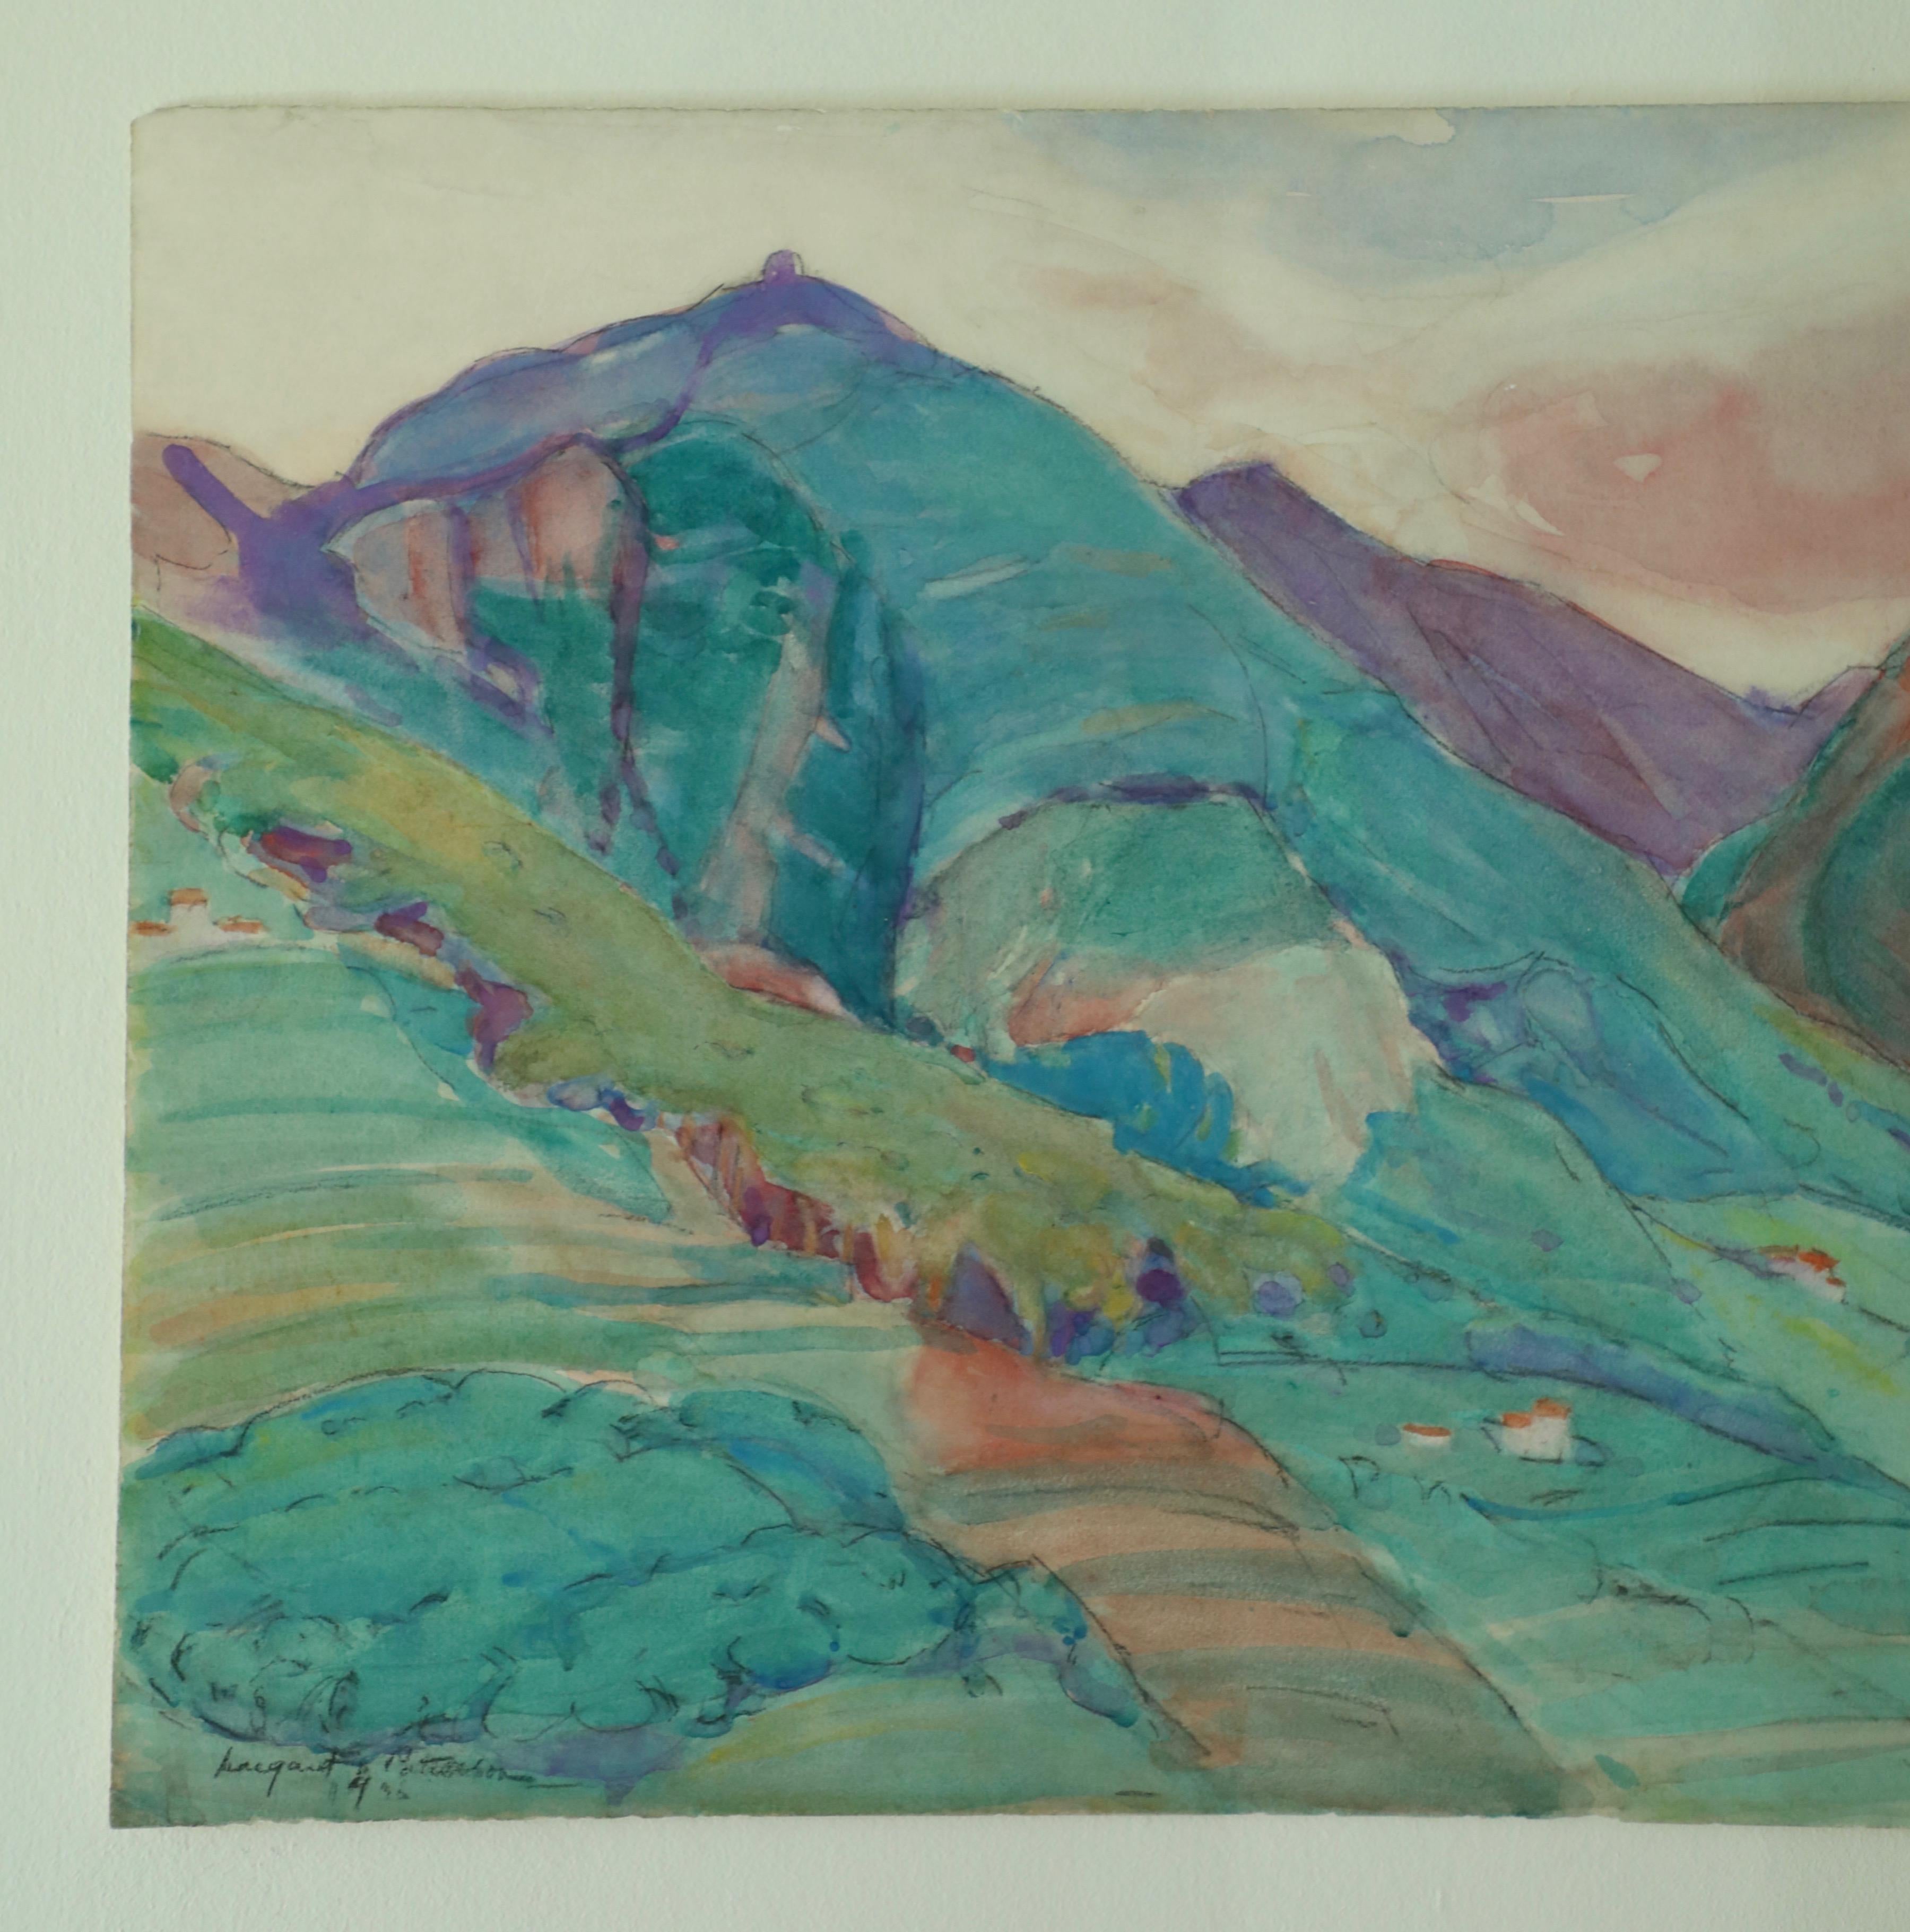 Watercolor and Graphite Landscape on Paper - Art by Margaret Jordan Patterson